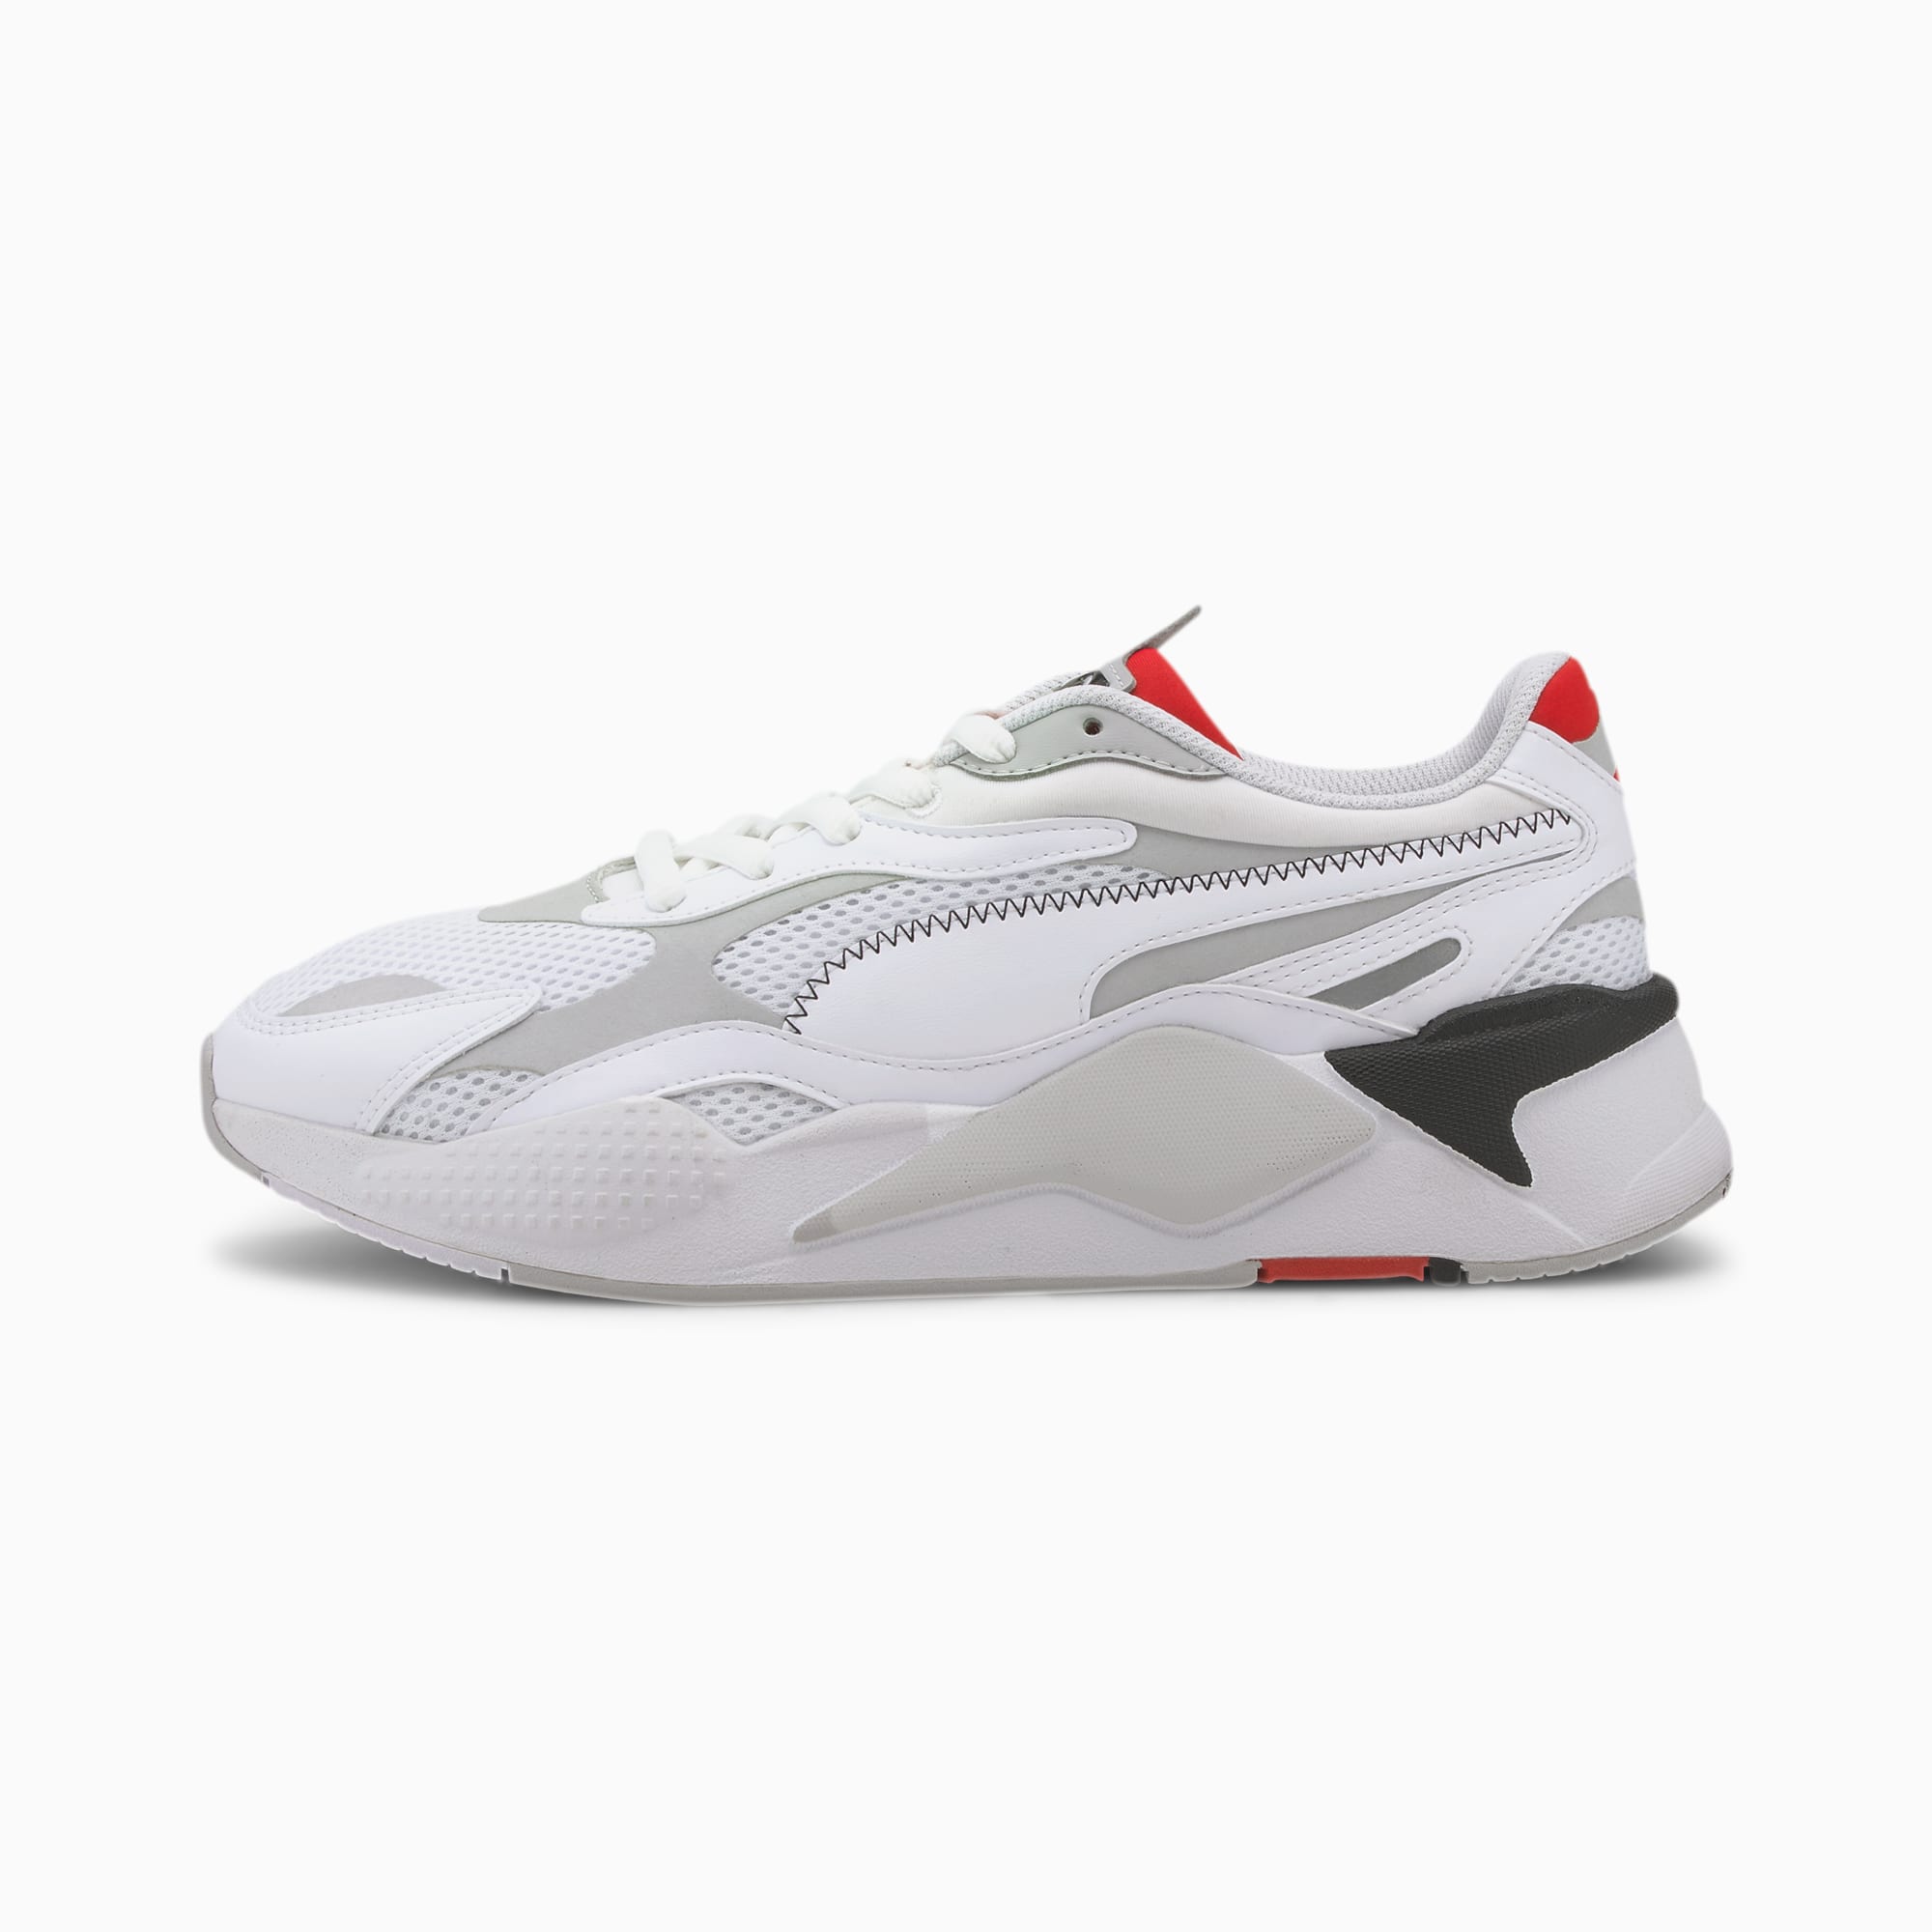 PUMA RS-X Millennium Sneaker Schuhe | Mit Aucun | Weiß/Grau | Größe: 44.5